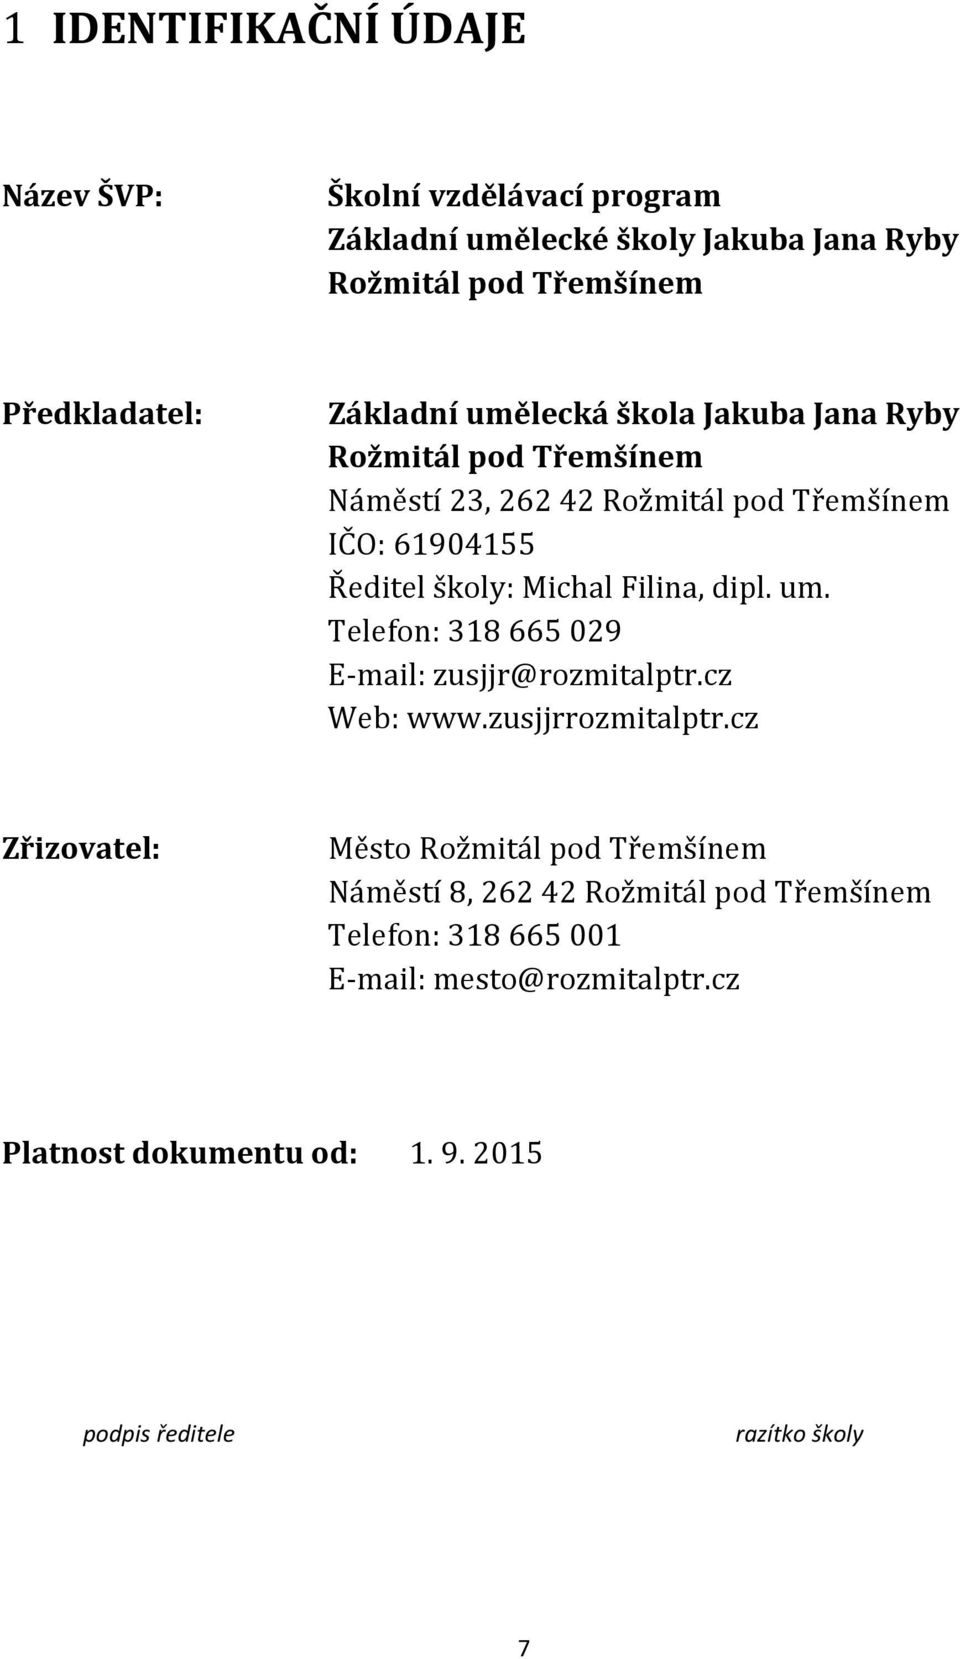 Filina, dipl. um. Telefon: 318 665 029 E-mail: zusjjr@rozmitalptr.cz Web: www.zusjjrrozmitalptr.